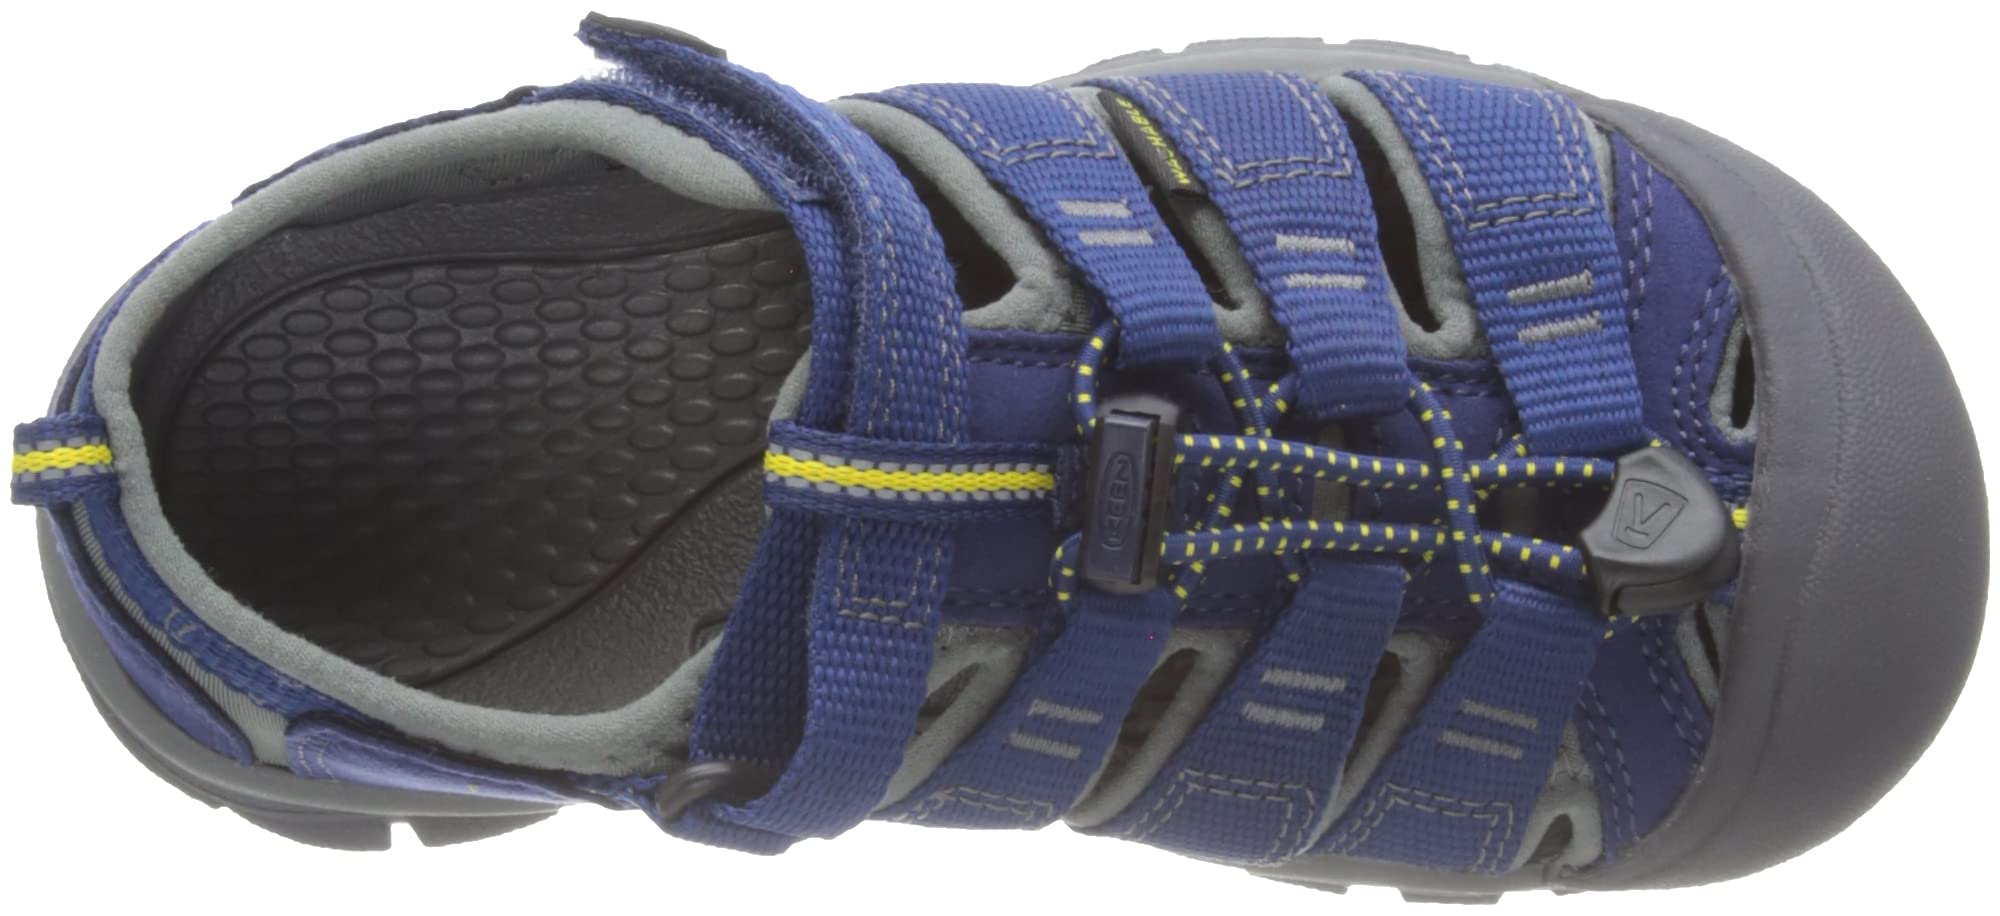 KEEN Unisex-Child Newport H2 Closed Toe Water Sandals, Blue Depths/Gargoyle, 4 Big Kid US